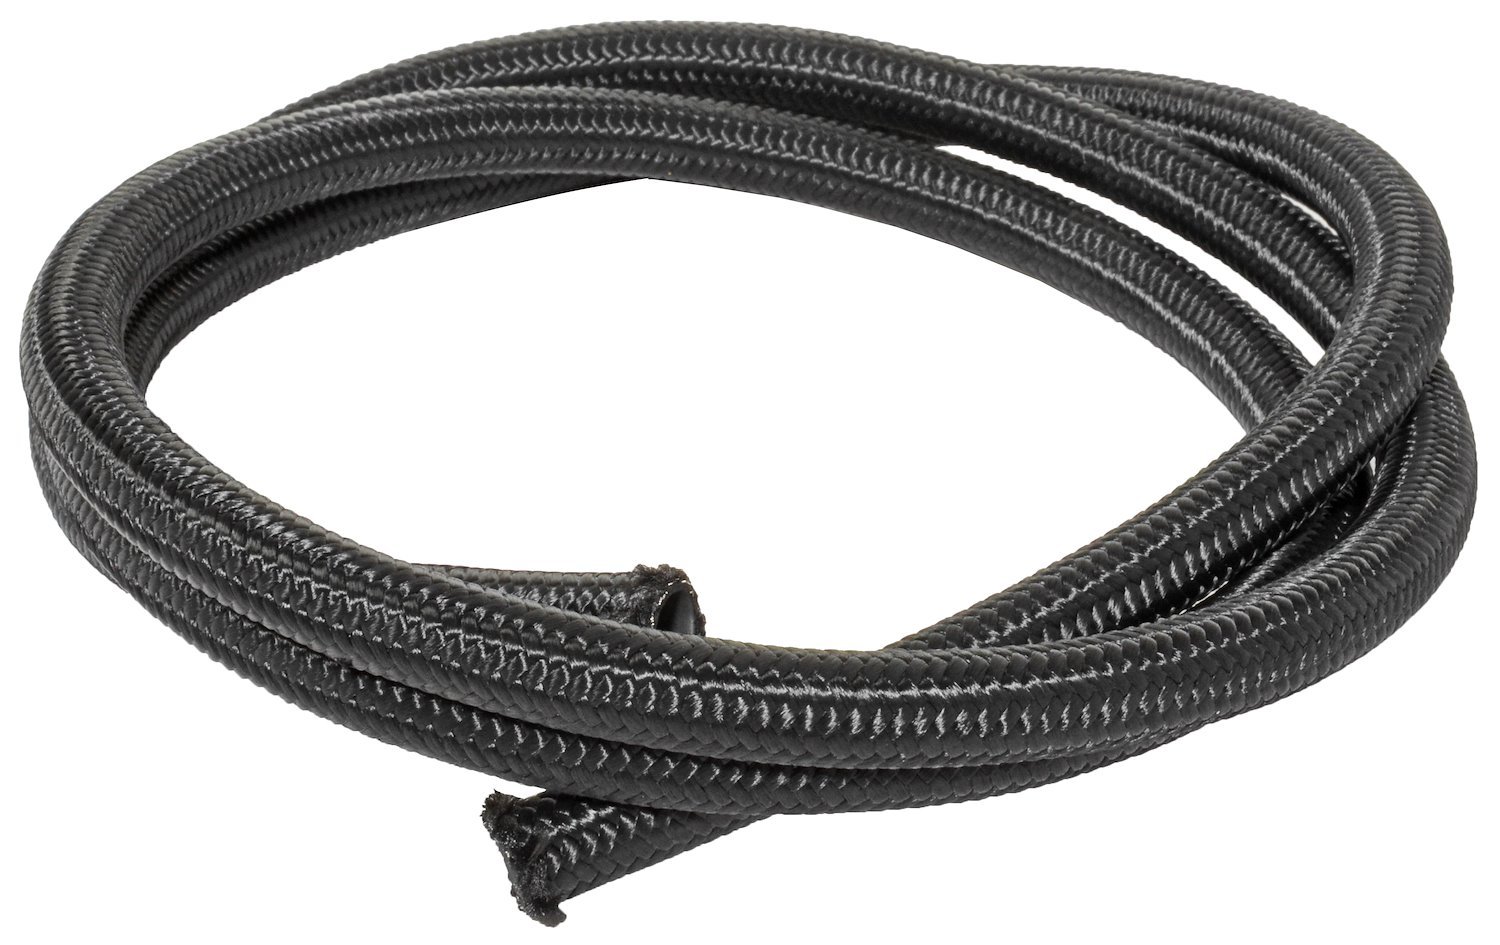 Pro-Flo 350 Black Nylon Braided Hose [-8 AN, 20 ft]